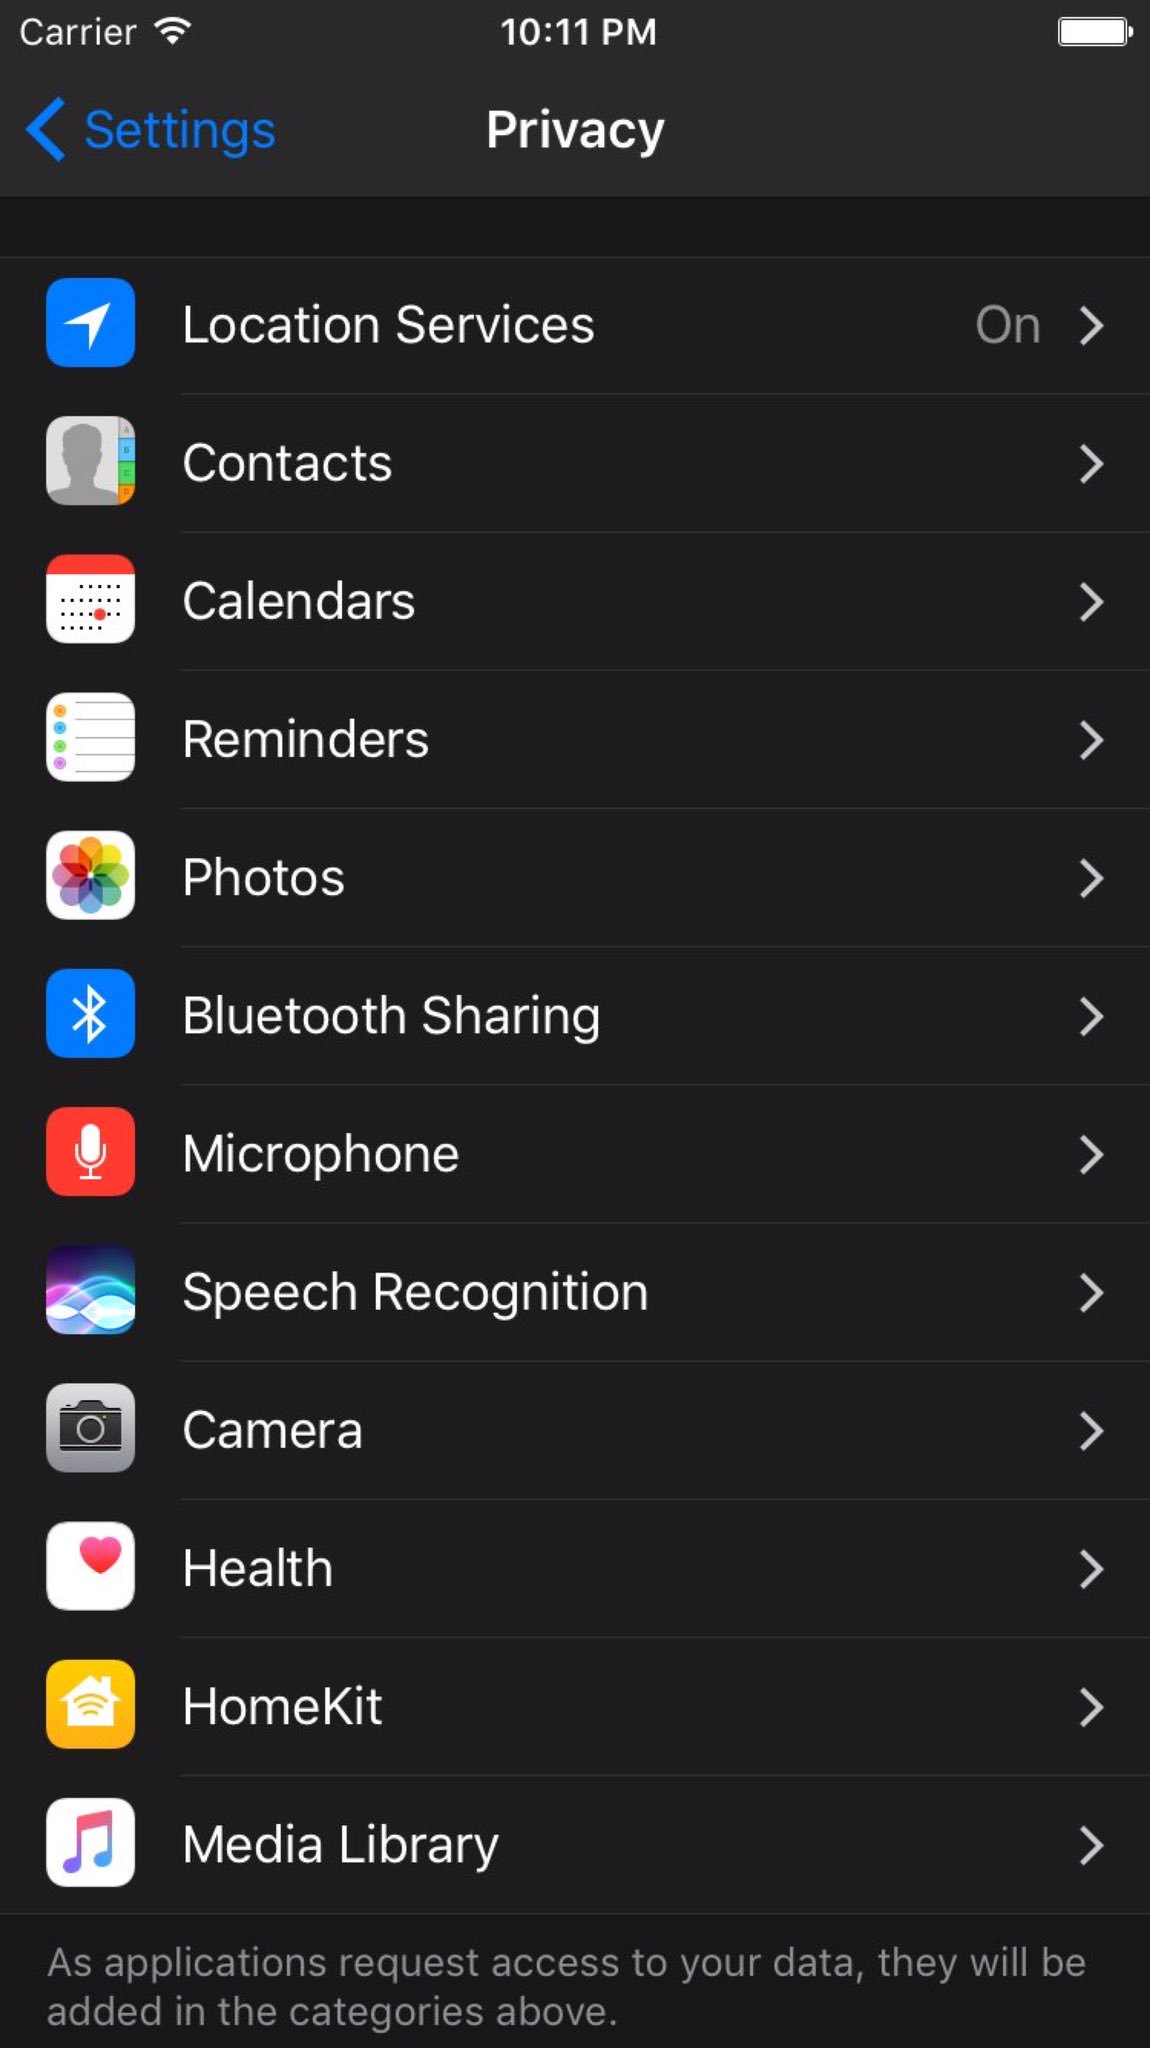 More Evidence of Hidden Dark Mode in iOS 10 [Images]